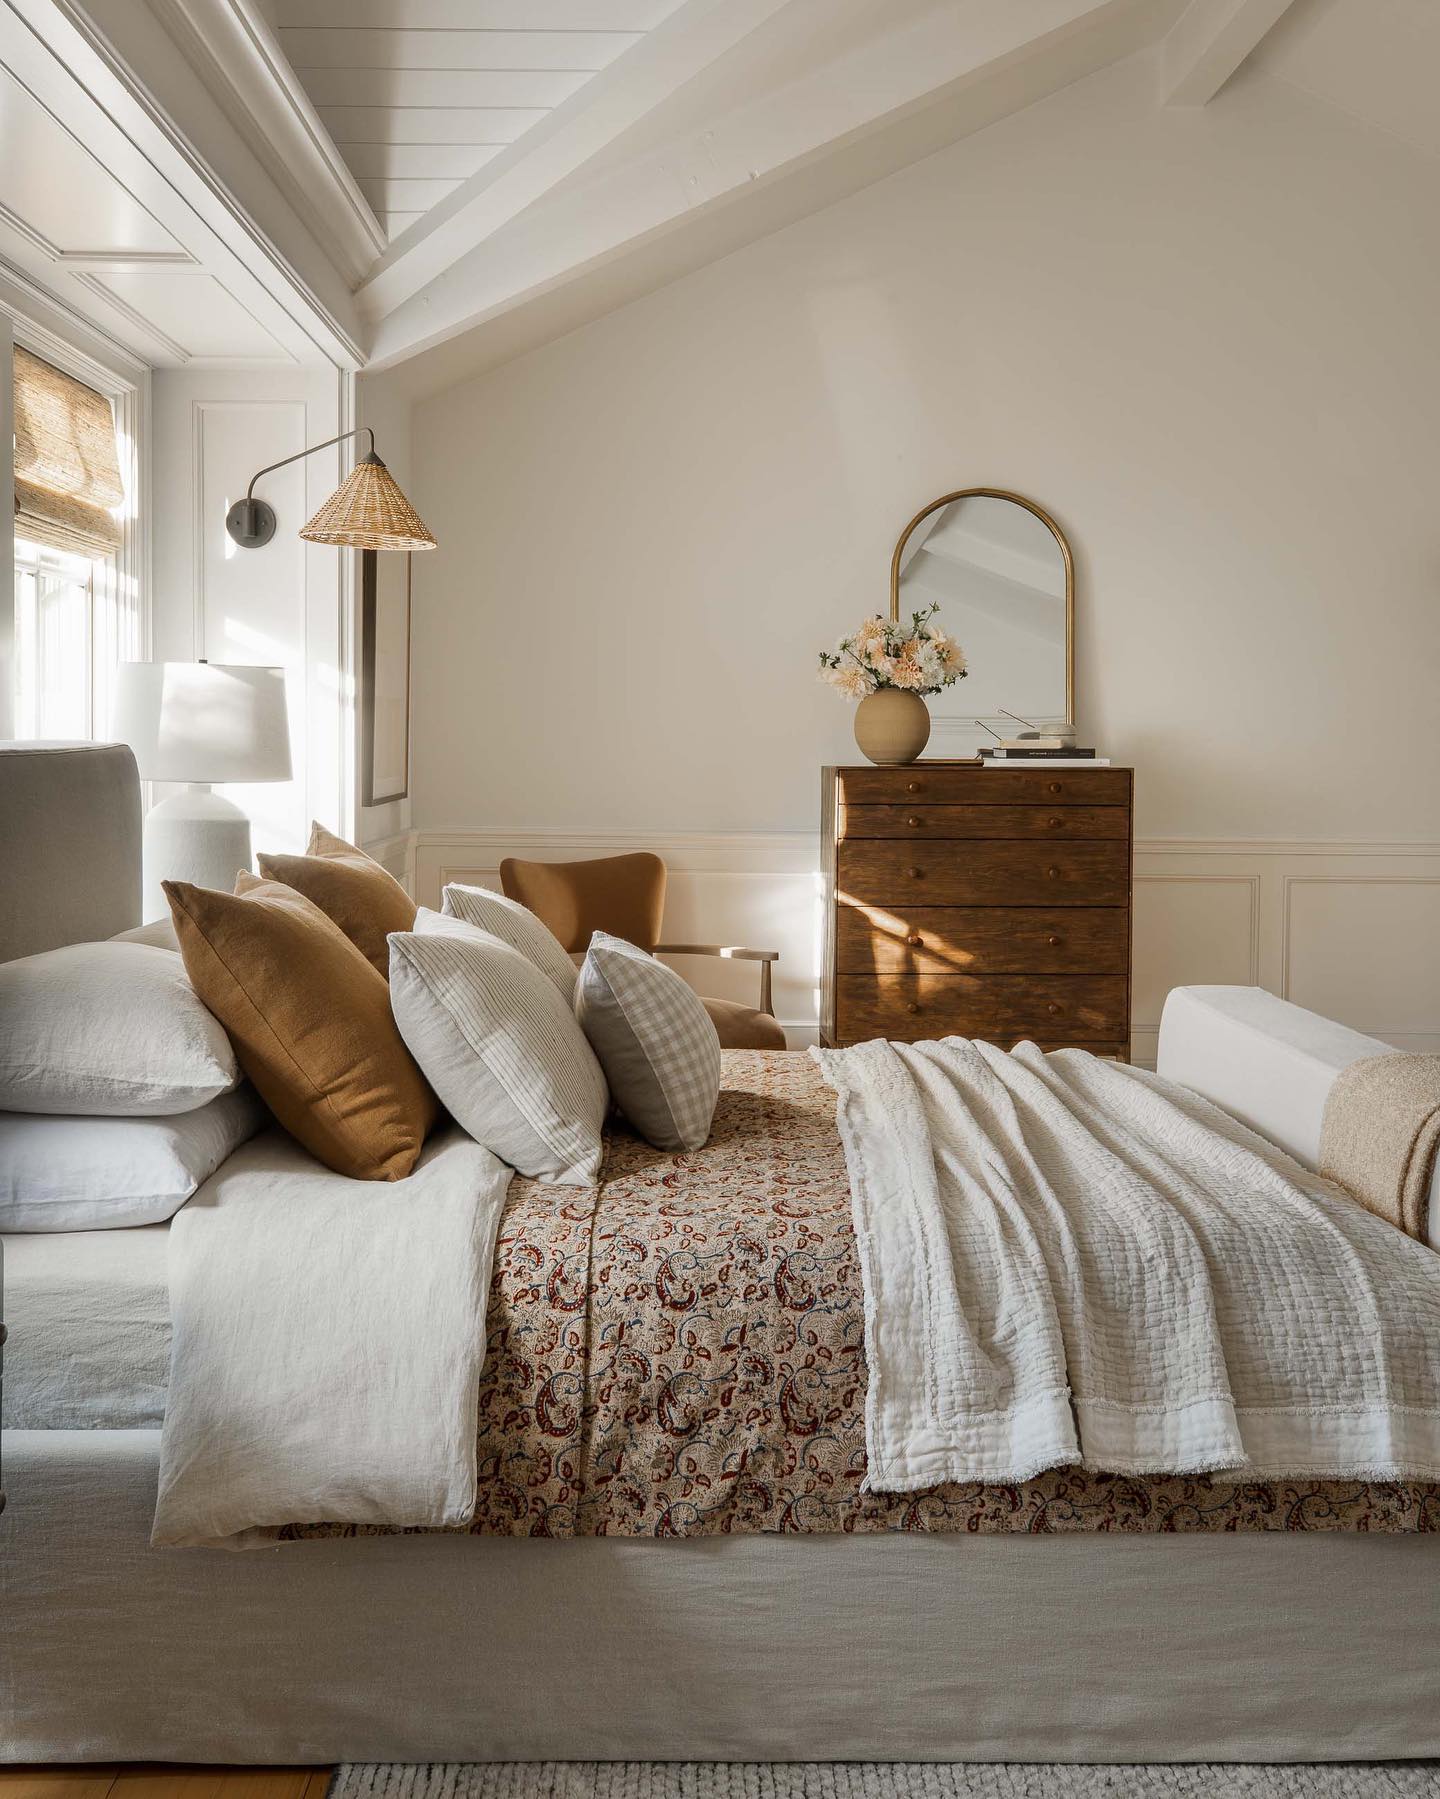 Quiet luxury bedroom example in home decor